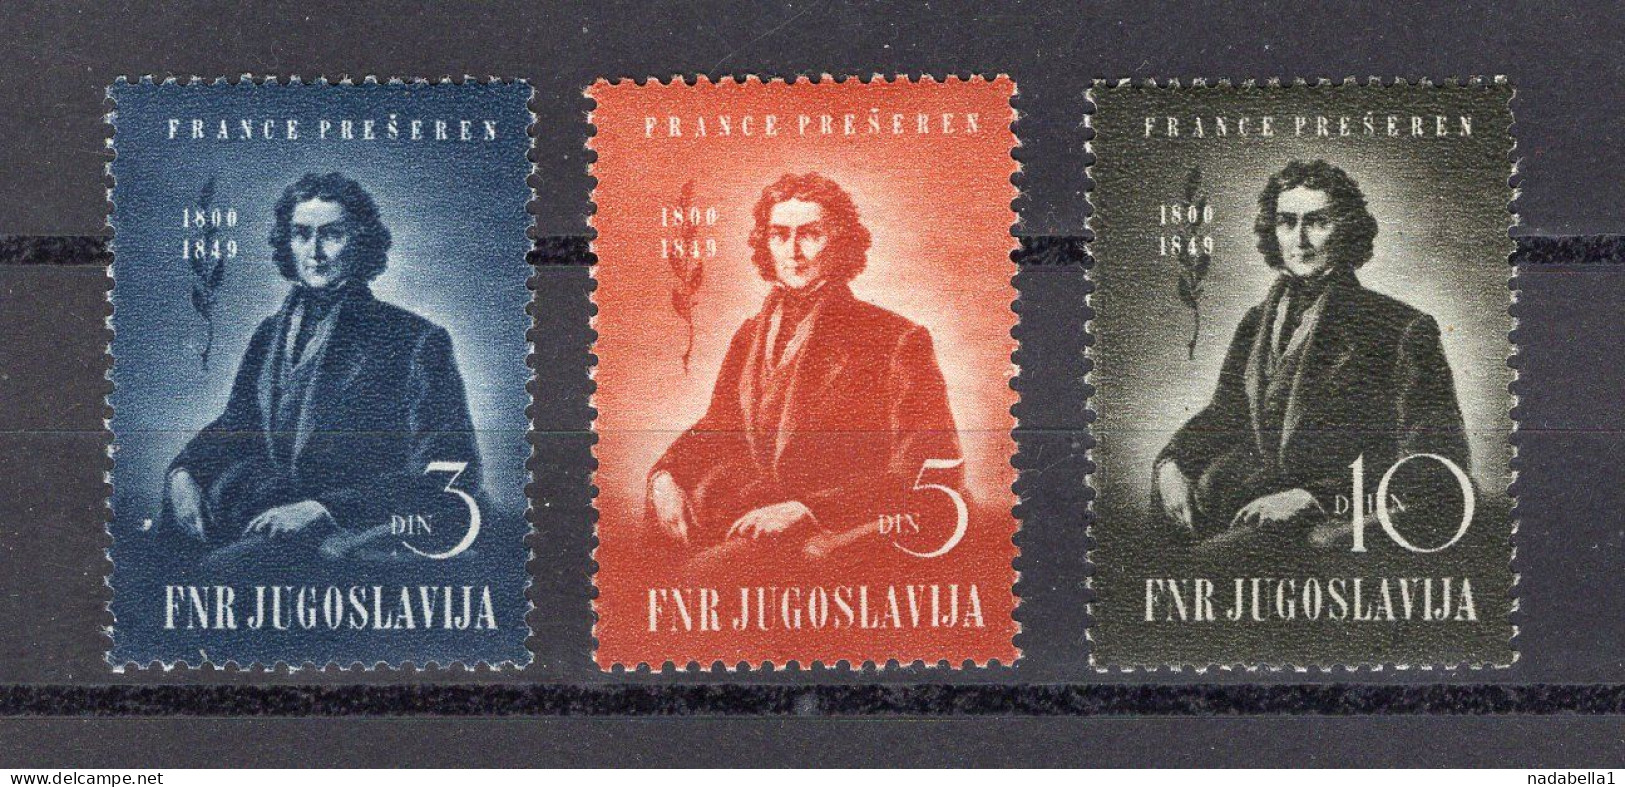 1949. YUGOSLAVIA,FRANCE PRESEREN 1800-1949,SET OF 3 STAMPS,MNH - Nuevos